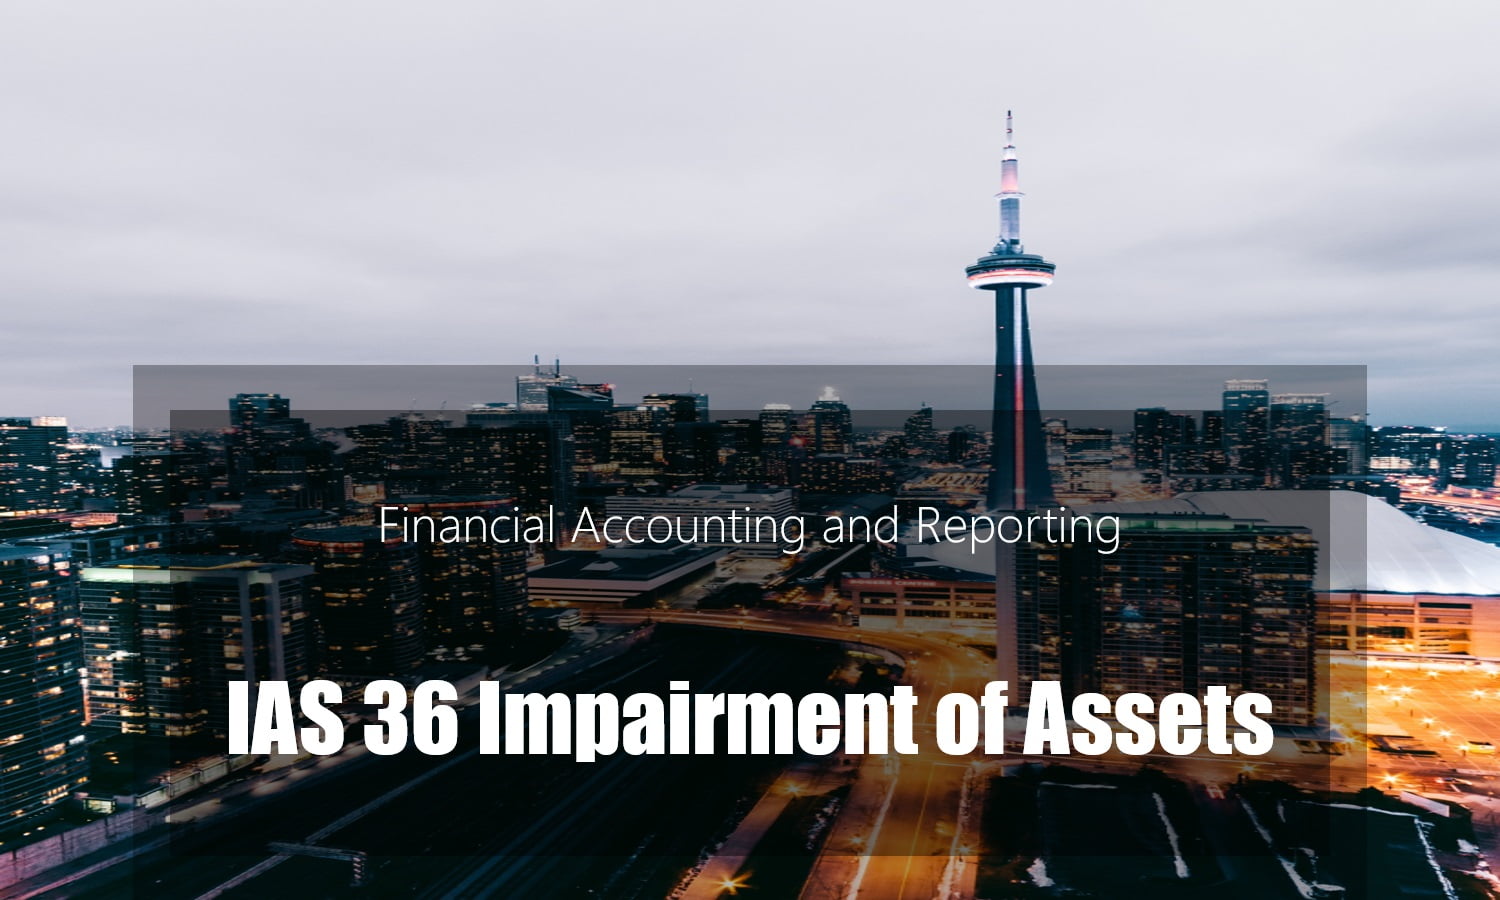 IAS 36 Impairment of Assets